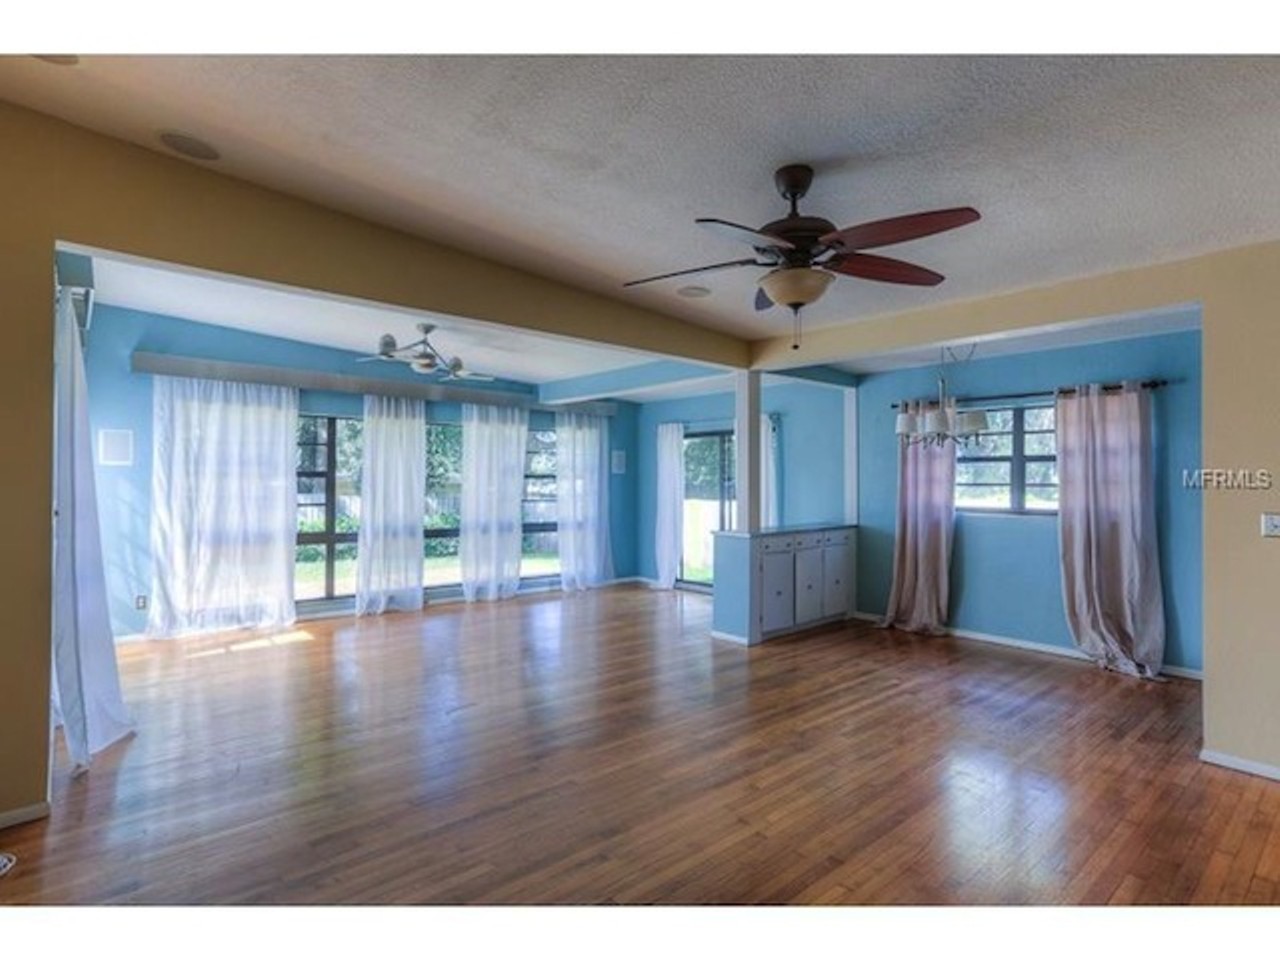 308 S. Hampton Ave., Orlando, 32803 (3 bedroom, 2 bath)Valued at: $250,000See more photos